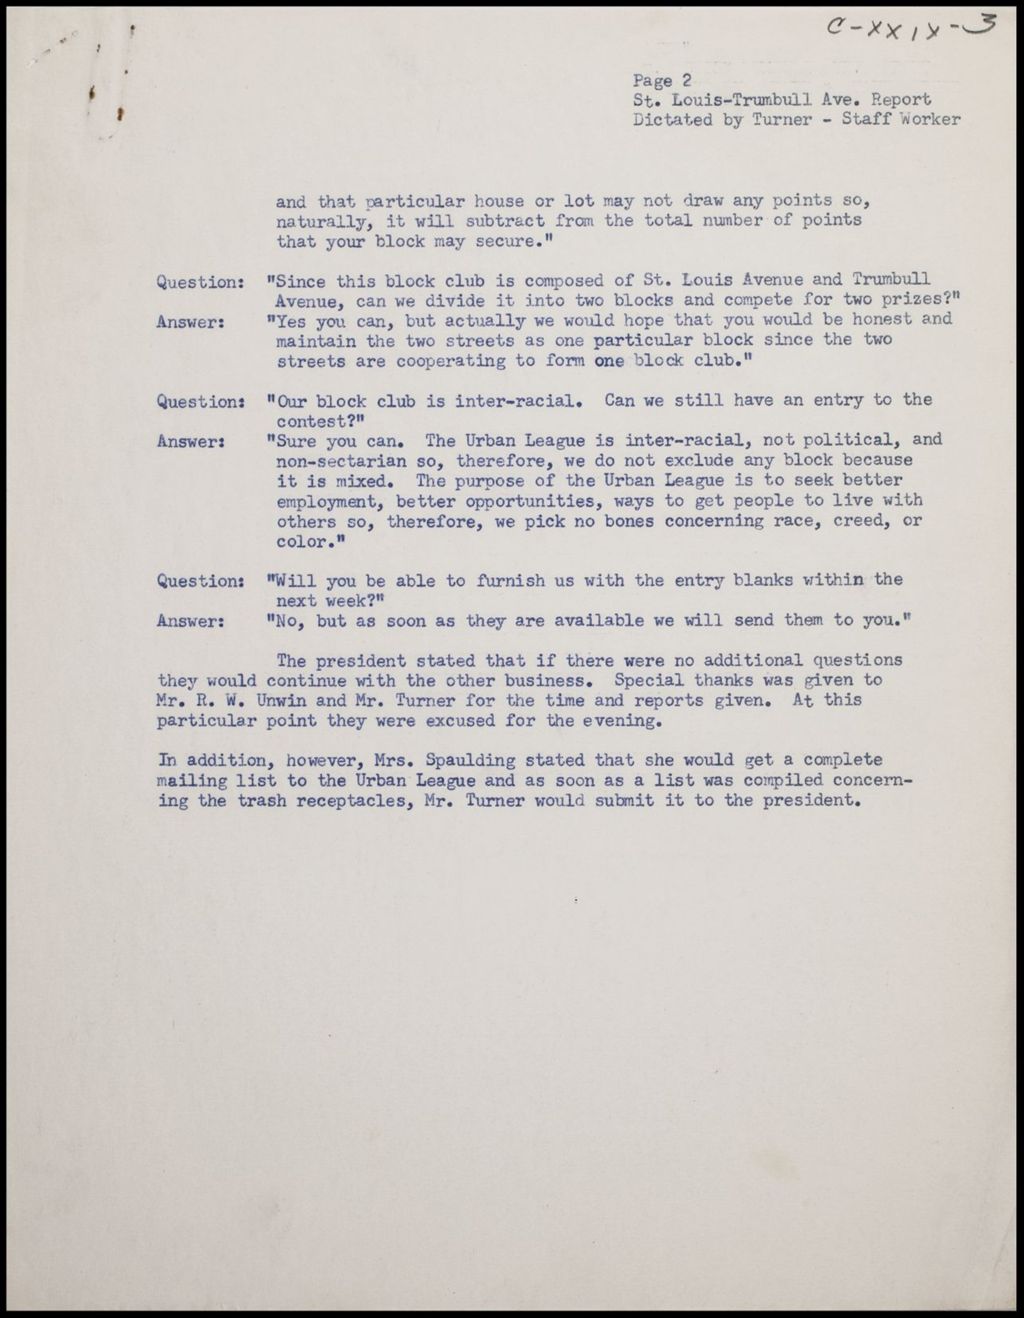 Miniature of Block Club Reports - DuSable Council, 1950-1954 (Folder II-2299)